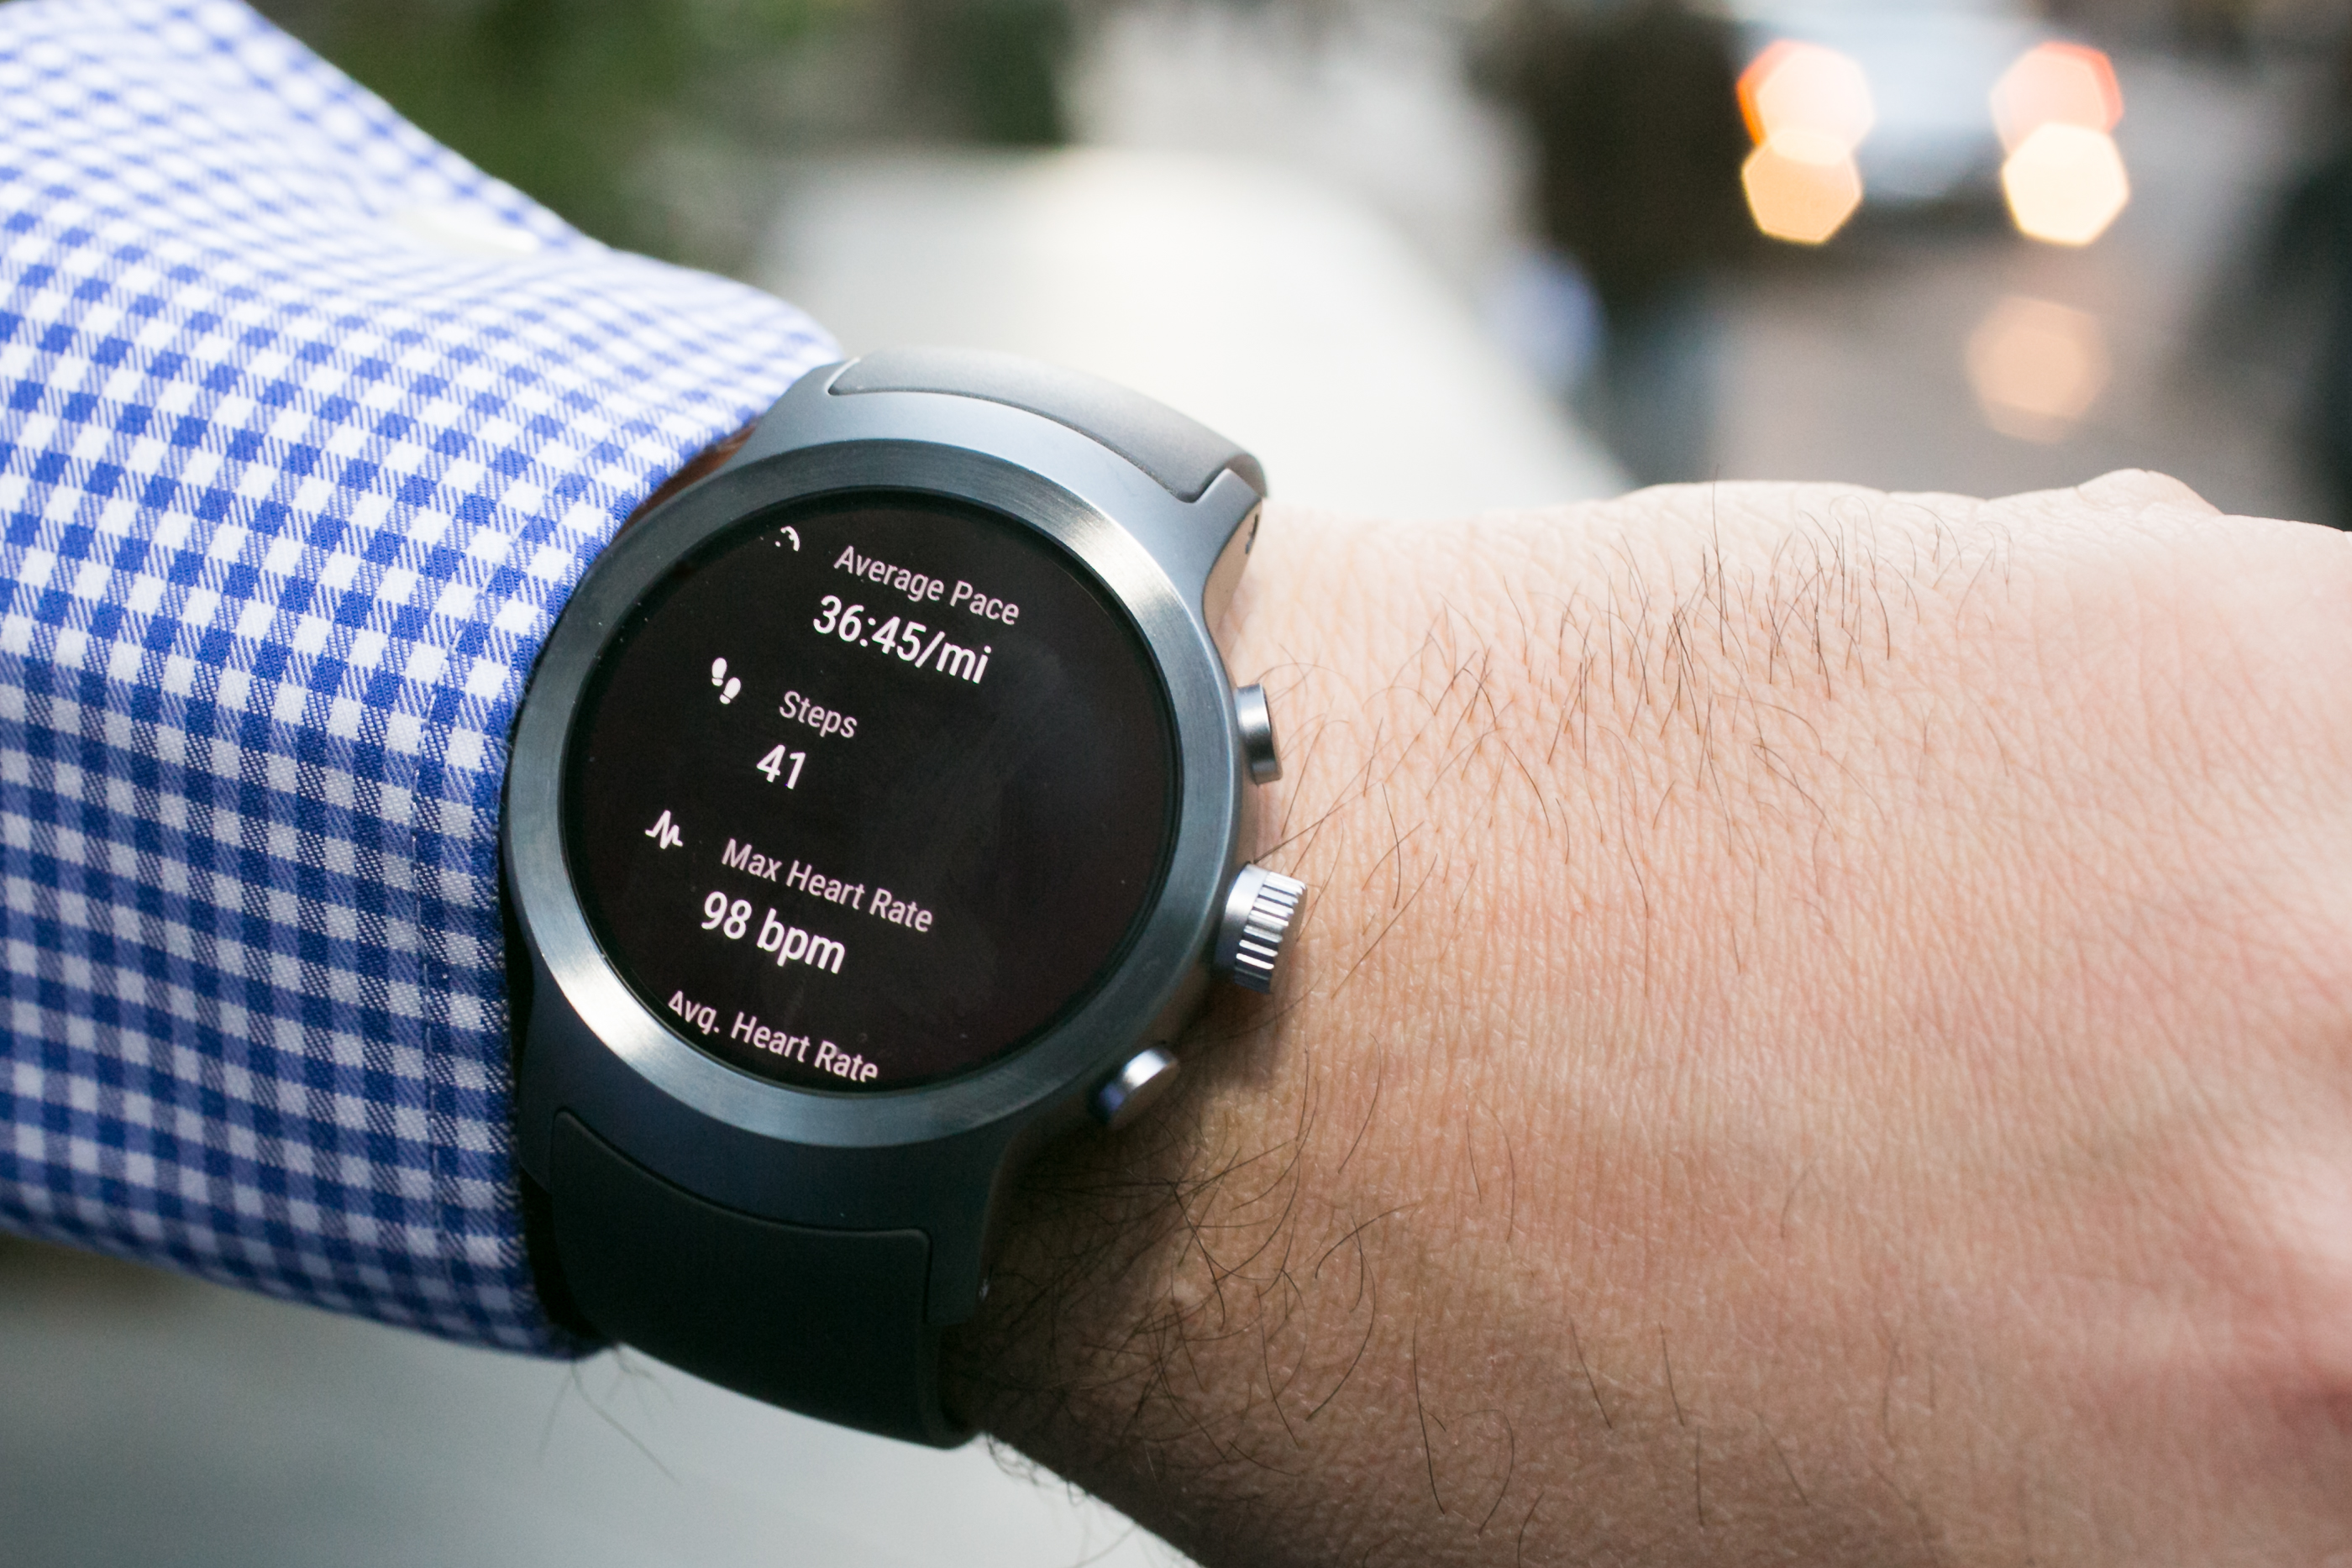 Wear время. Google Wear часы. Strava для часов. Wear Fit 2.0. Android Wear приложения для часов.